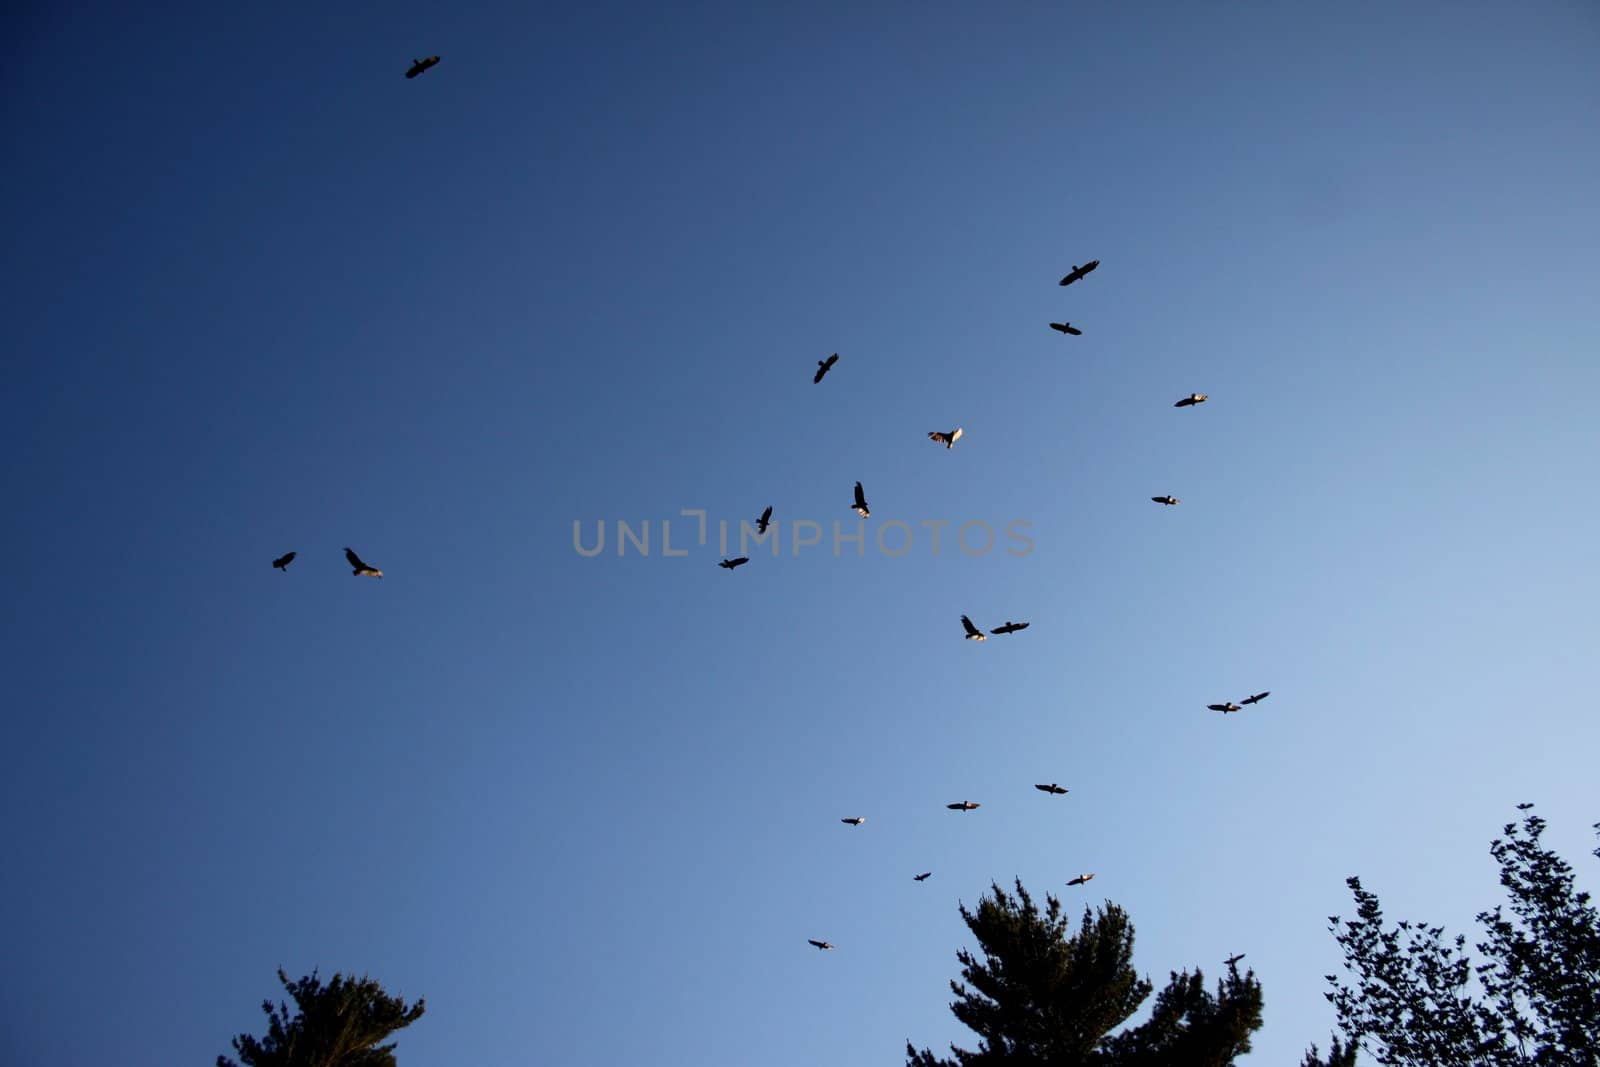 Falcons in the sky by dbriyul